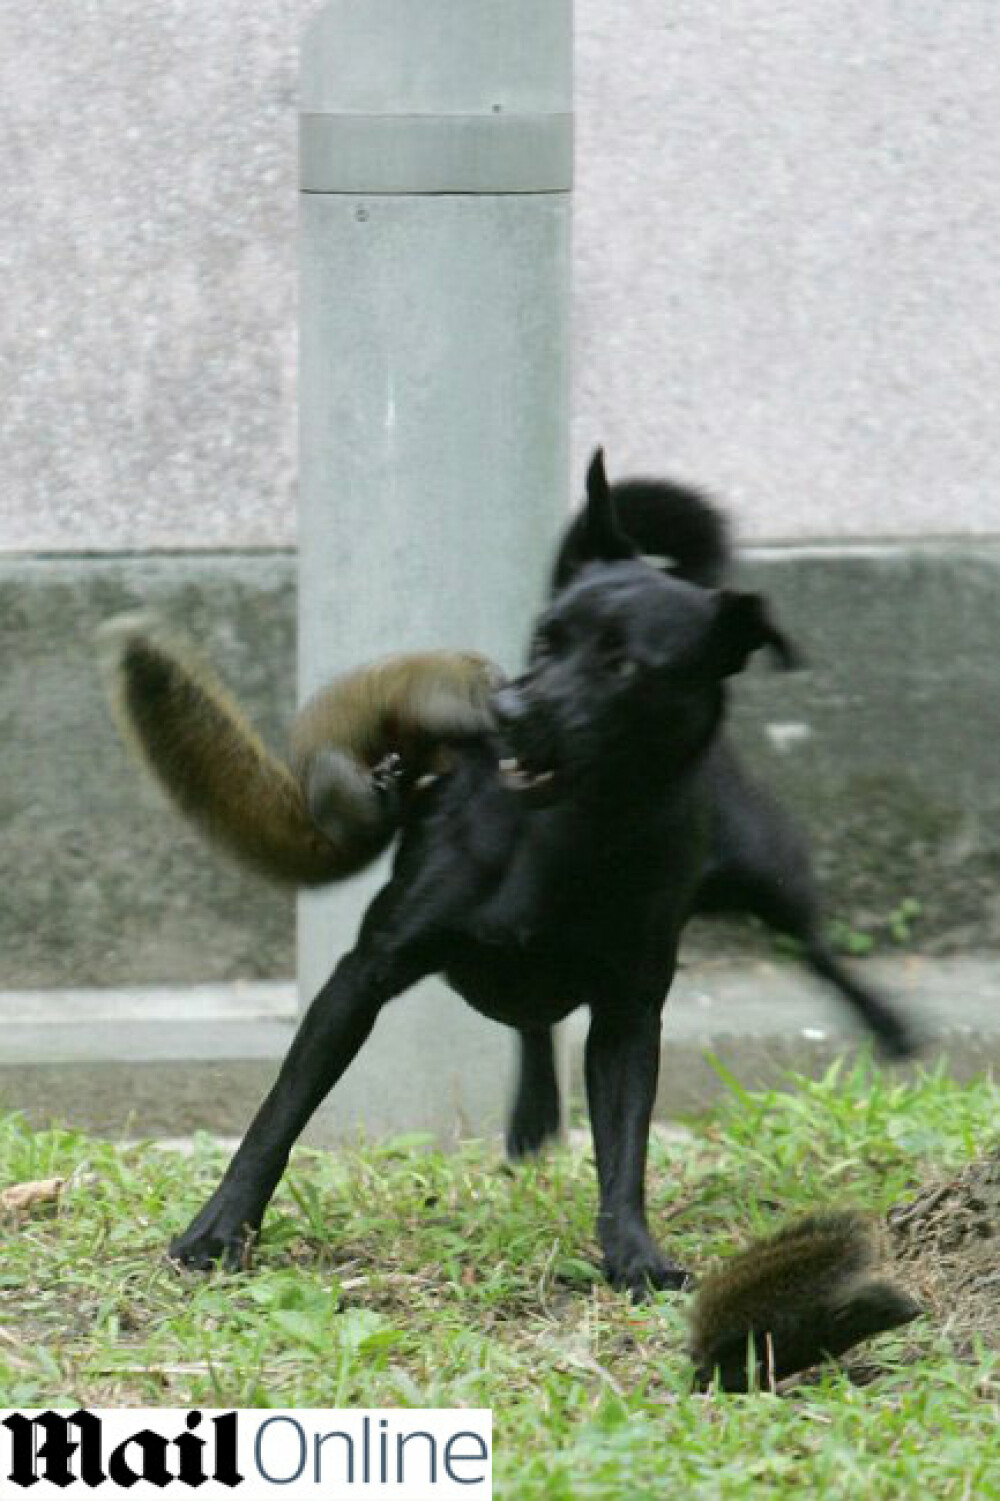 IMAGINI INCREDIBILE! O veverita isi salveaza puiul de atacul unui caine! - Imaginea 3